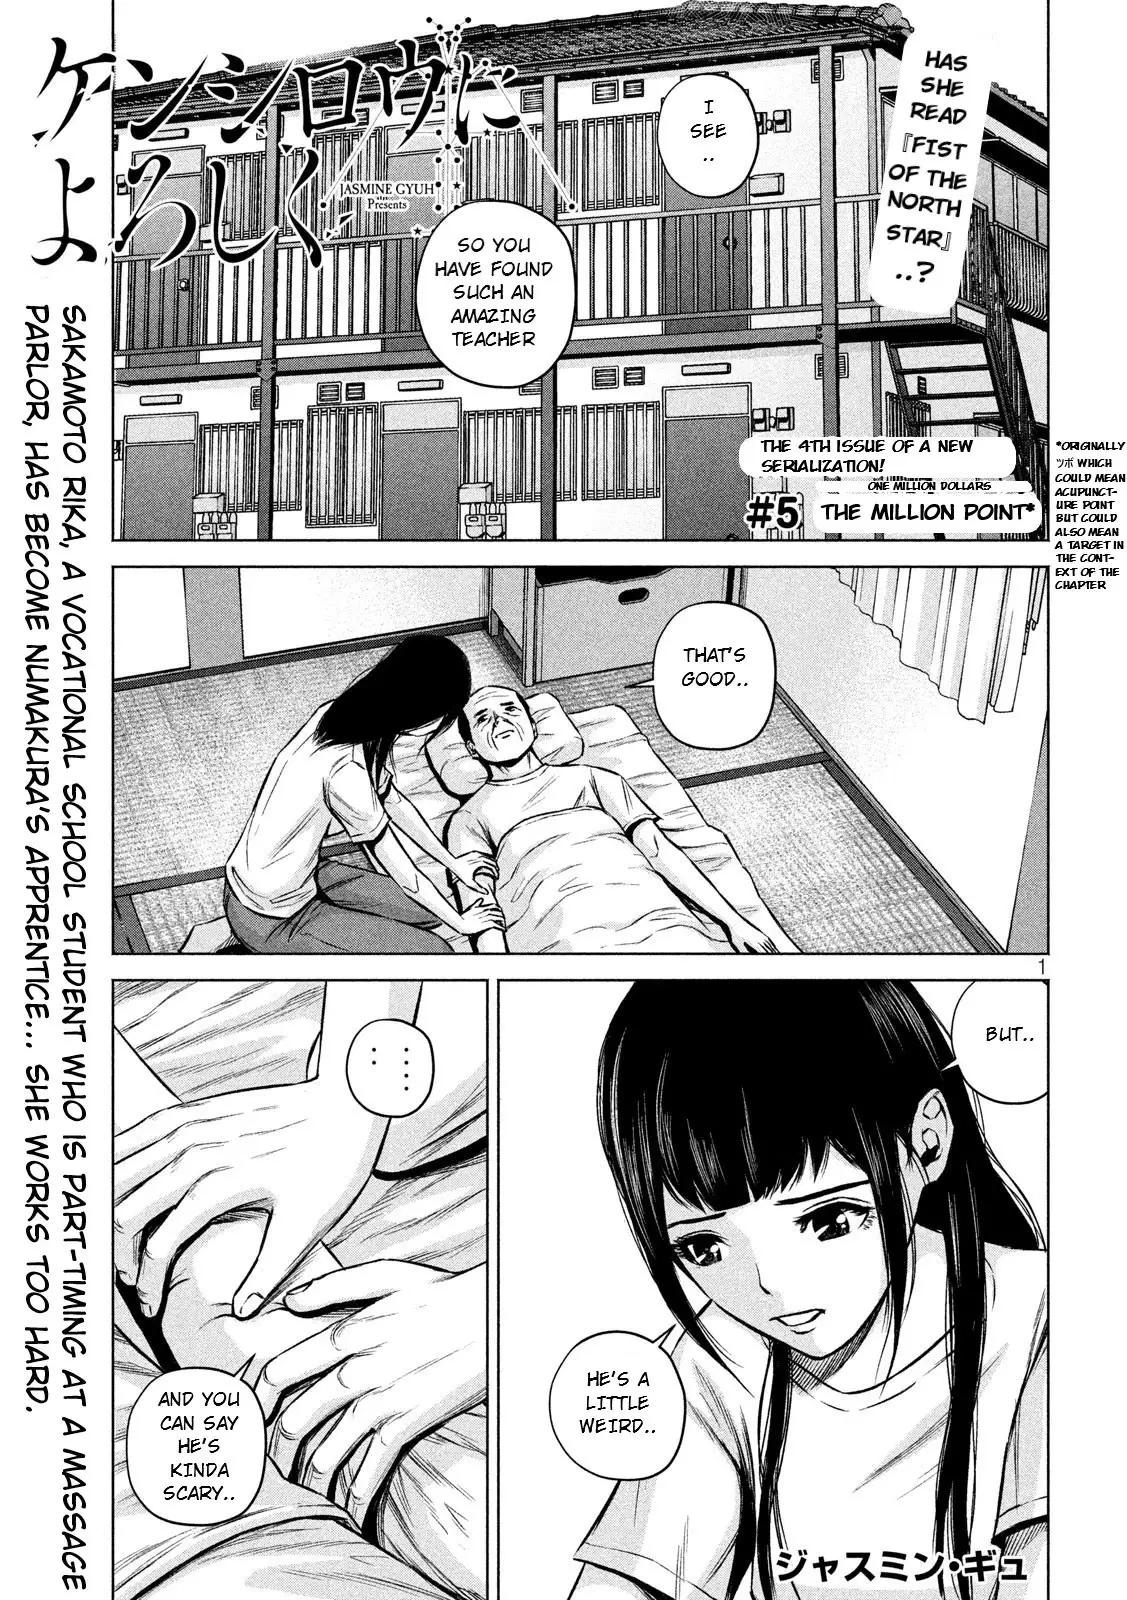 Send My Regards To Kenshiro - 5 page 1